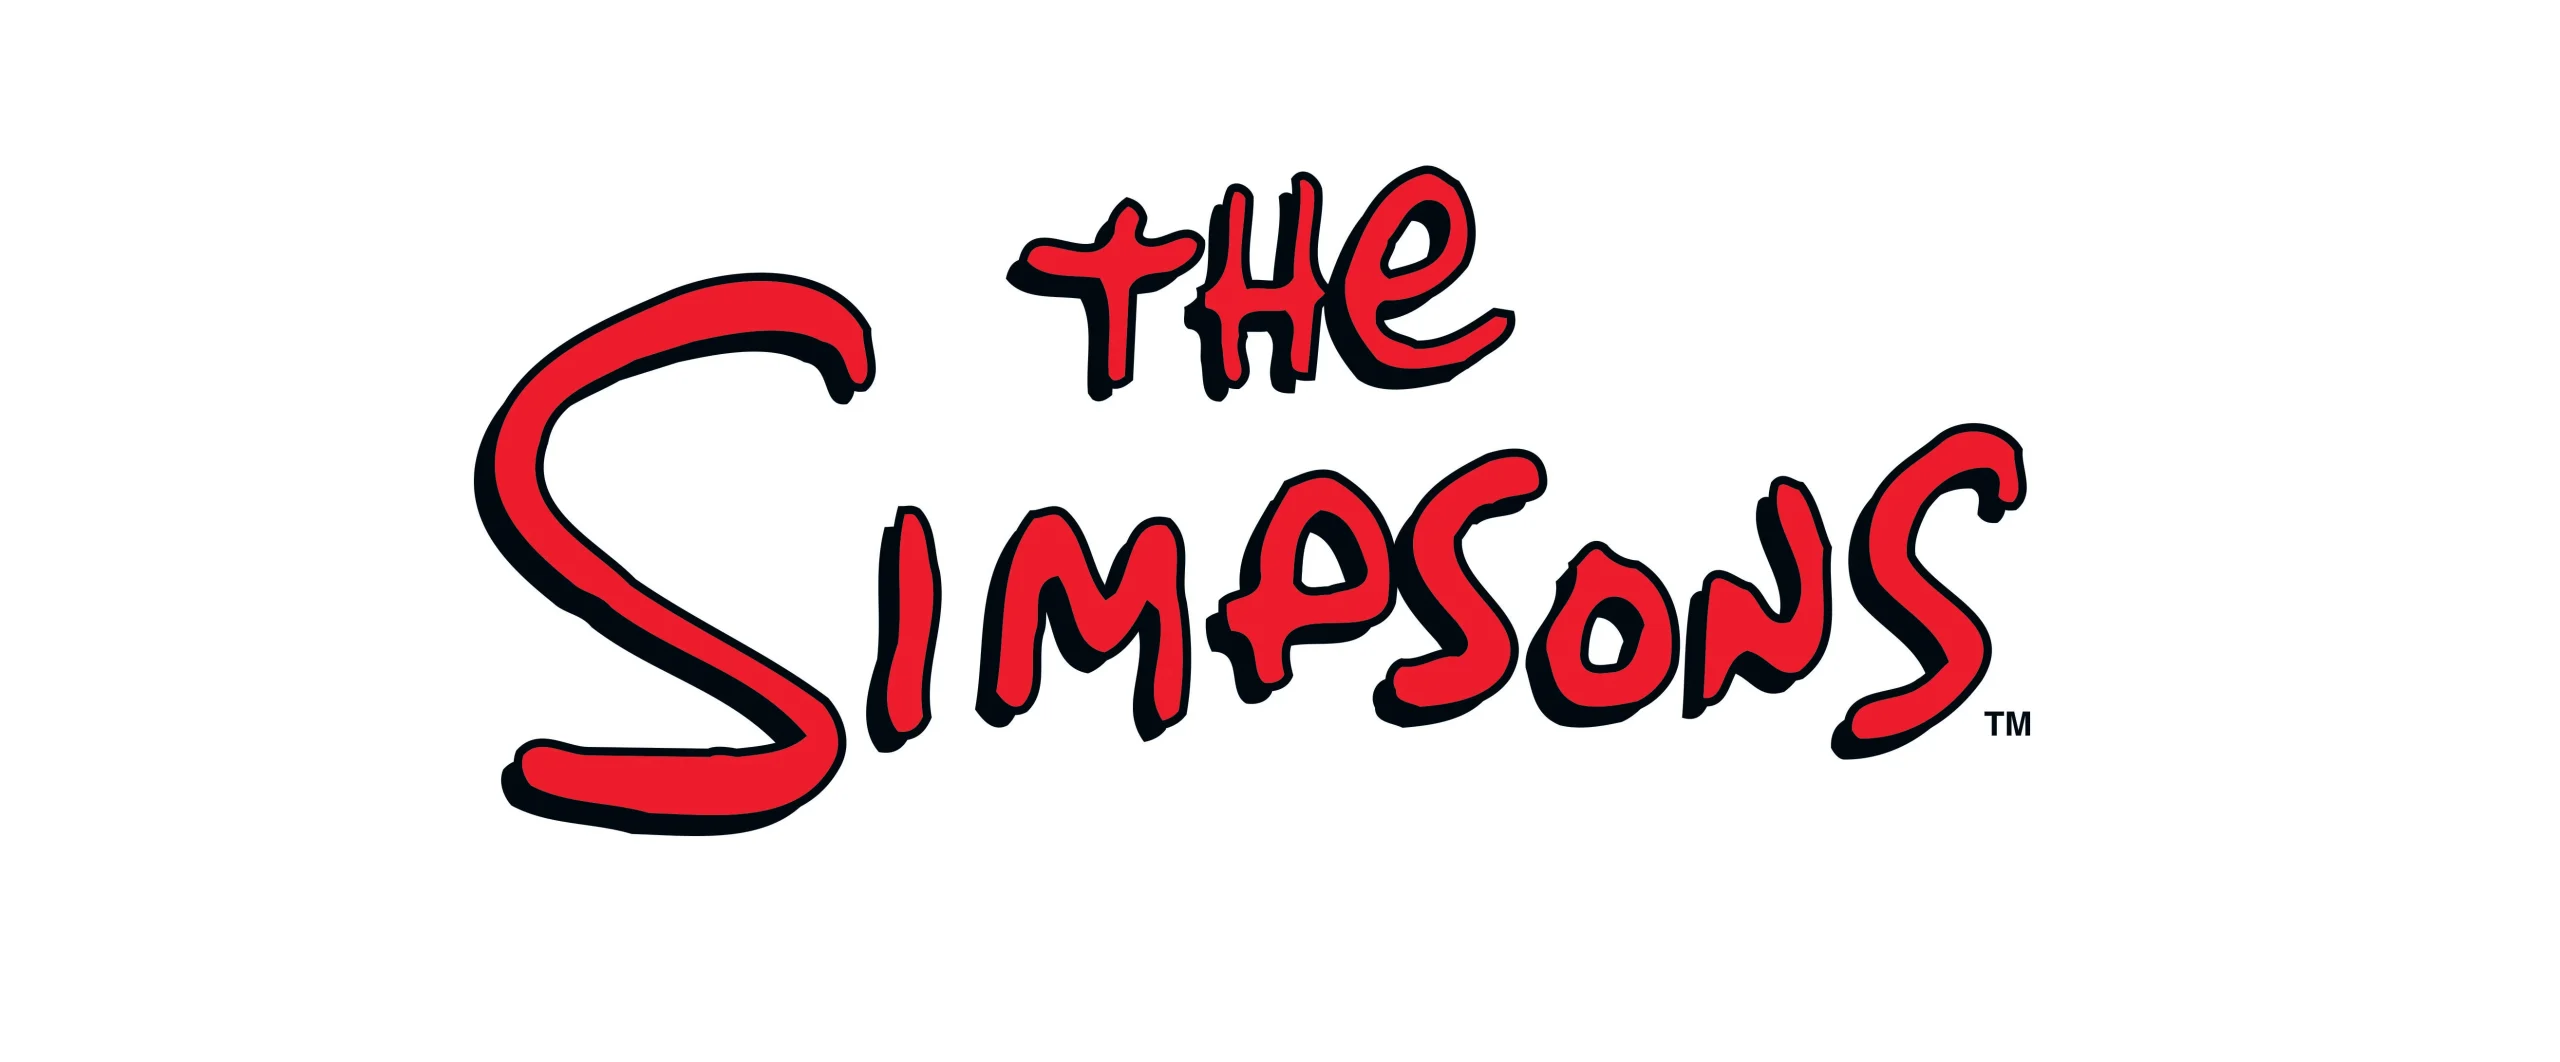 The Simpsons season 34 logo